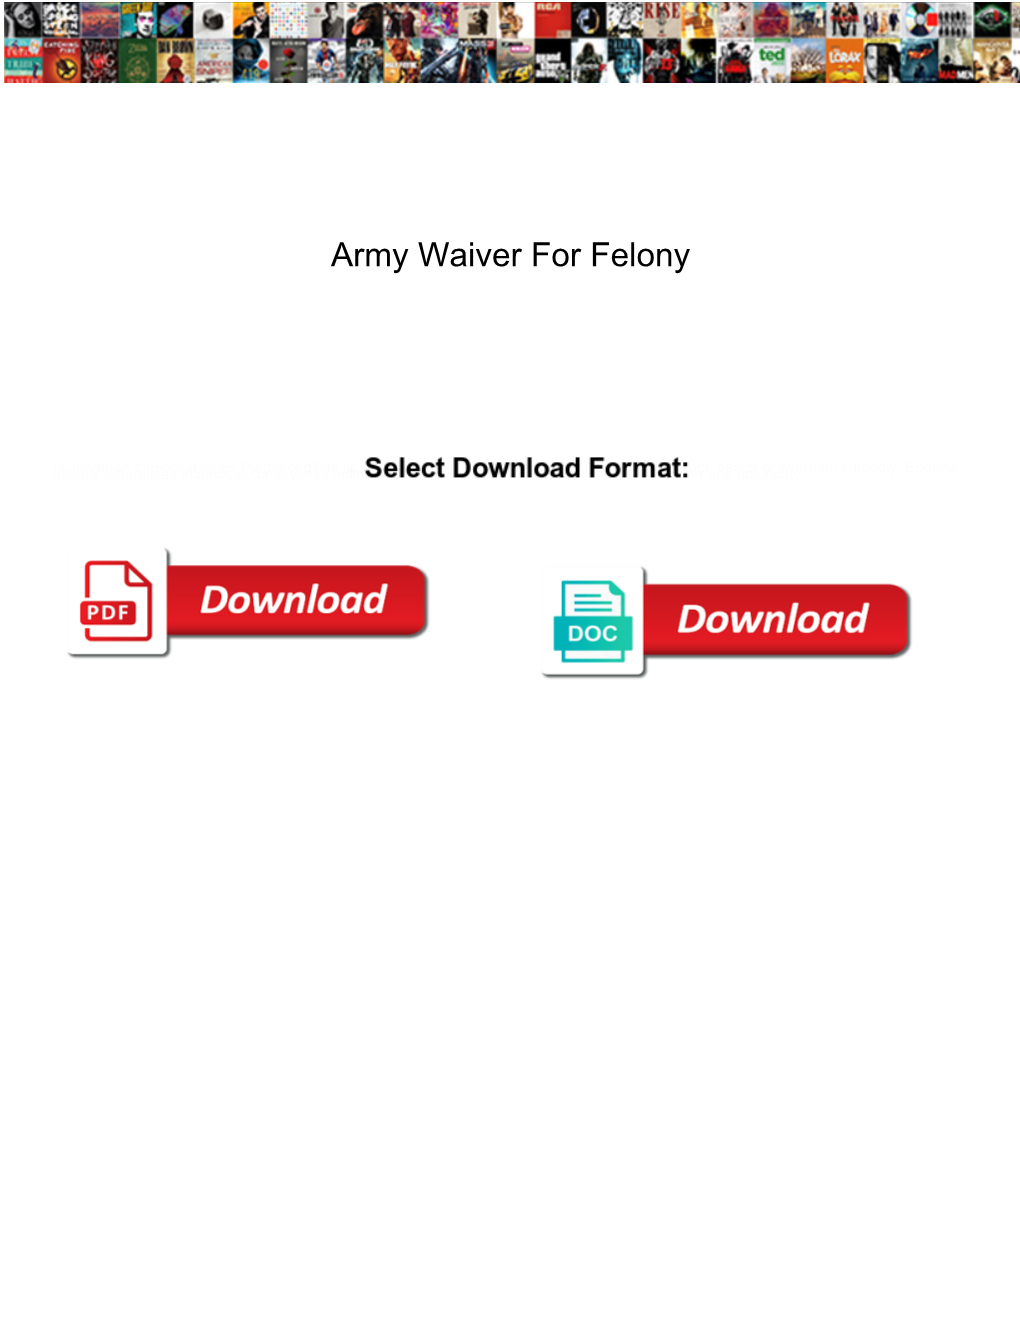 Army Waiver for Felony